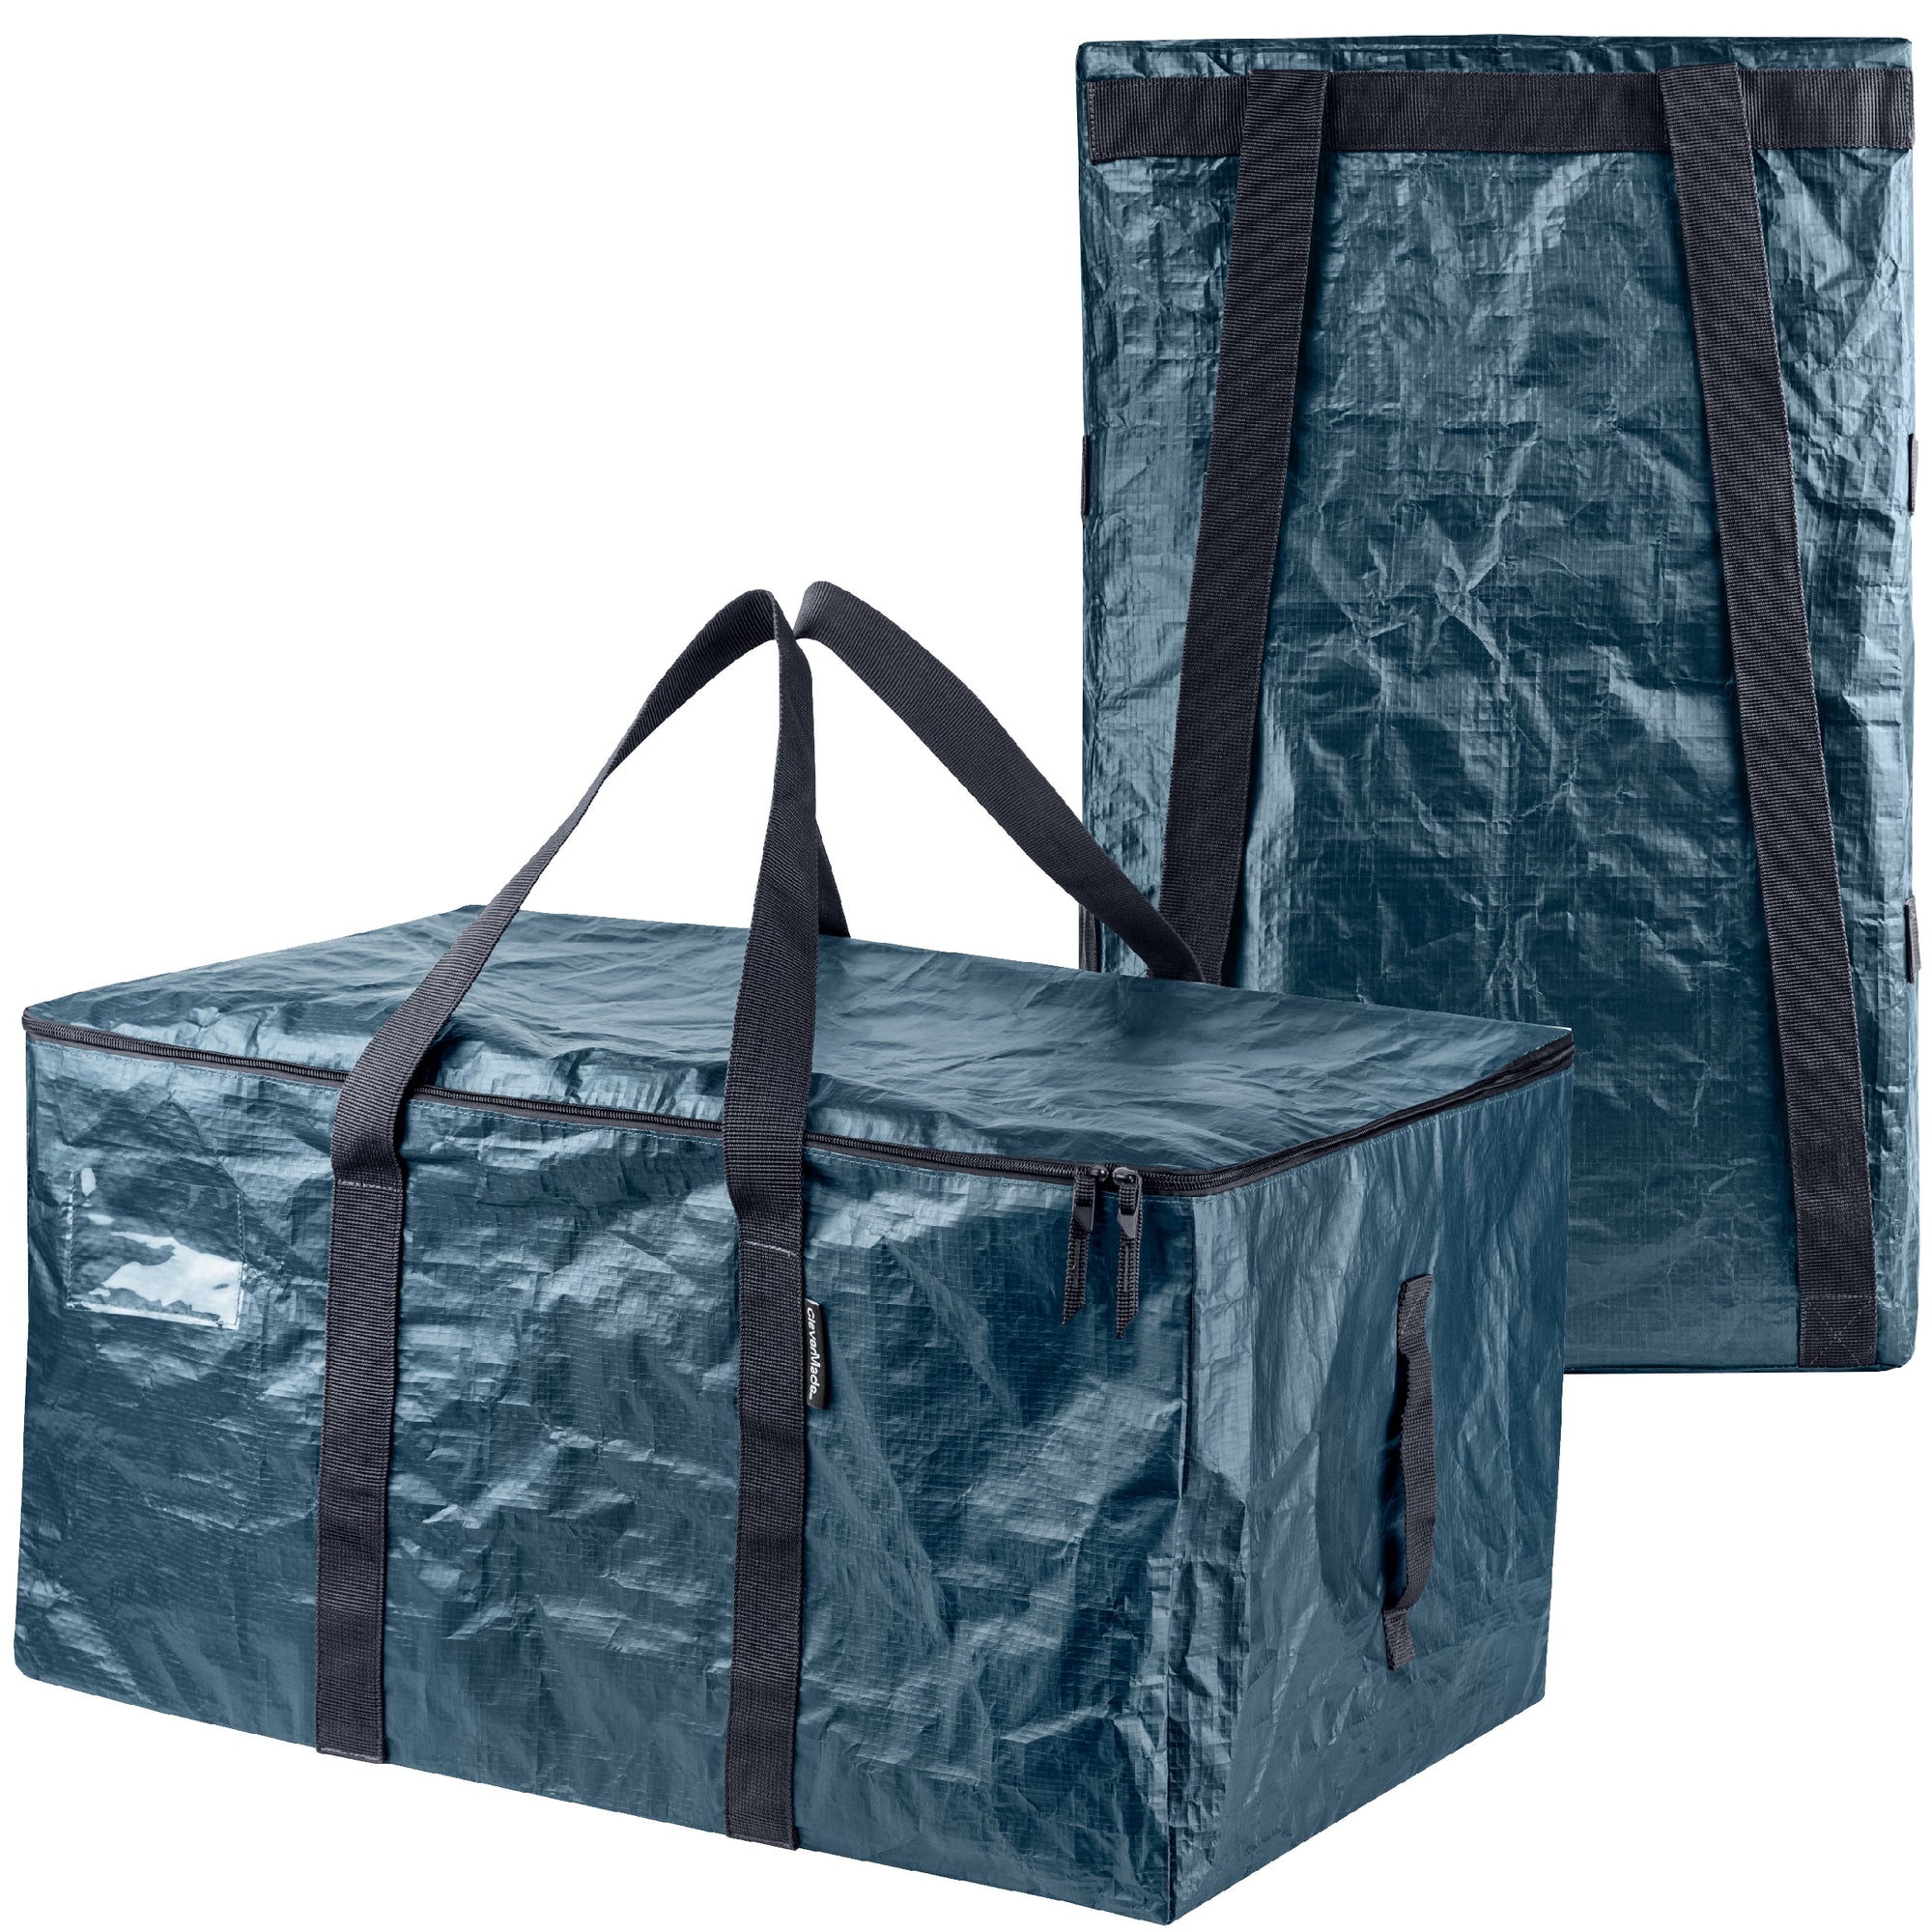 Clevermade Storage Basket, Frakta Grocery Shopping Bag, White Magnolia 2 Pack, Men's, Size: Large